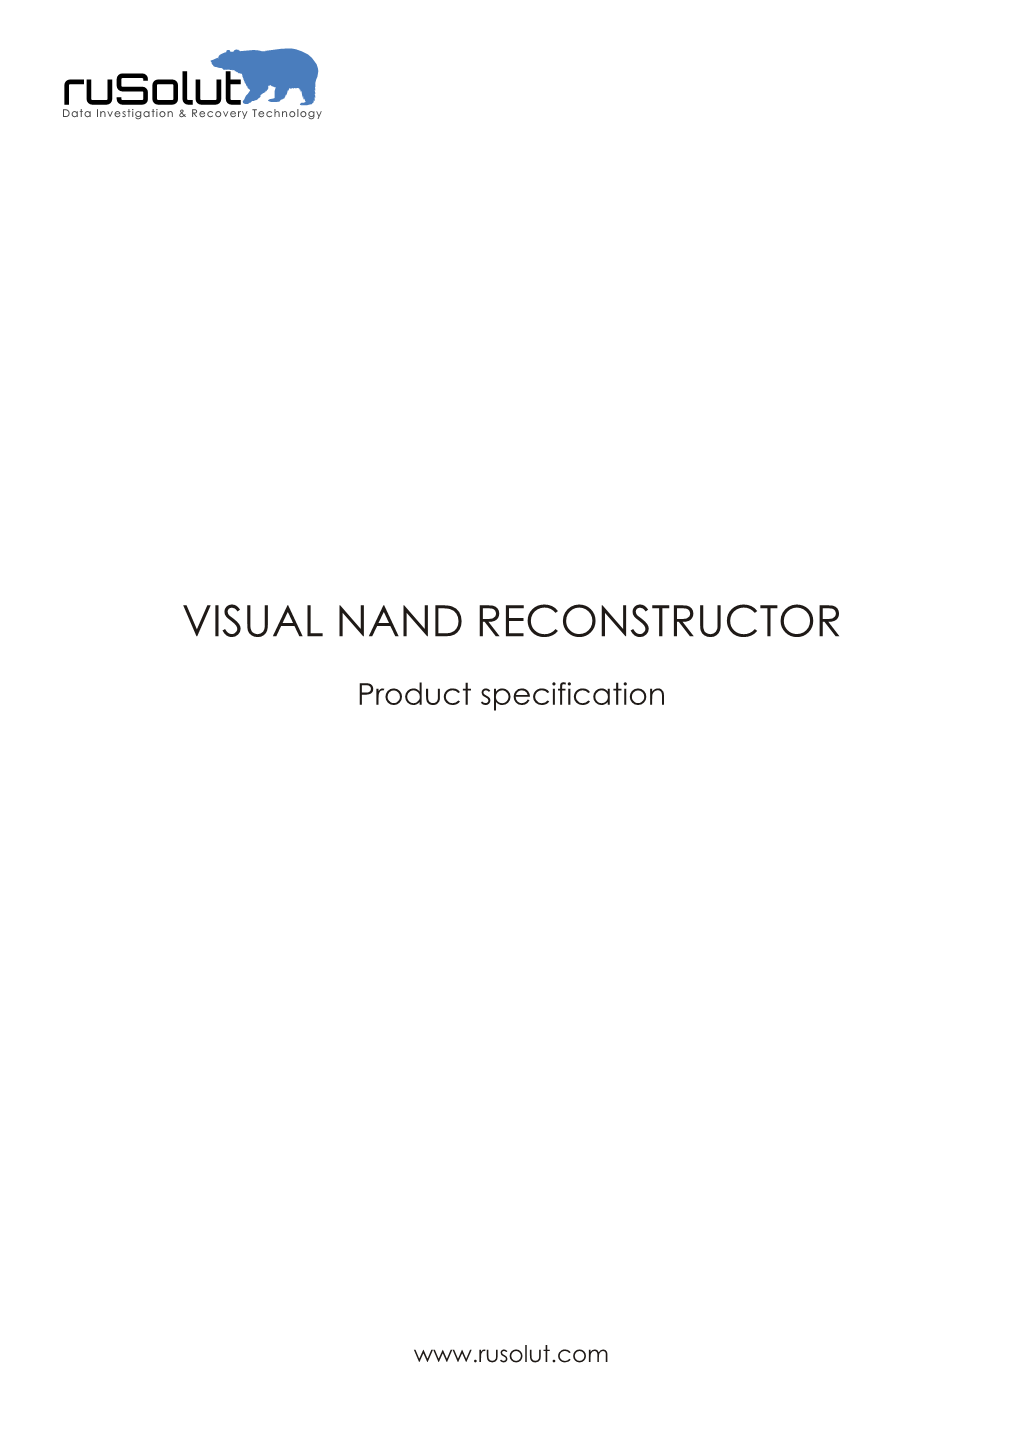 Visual Nand Reconstructor